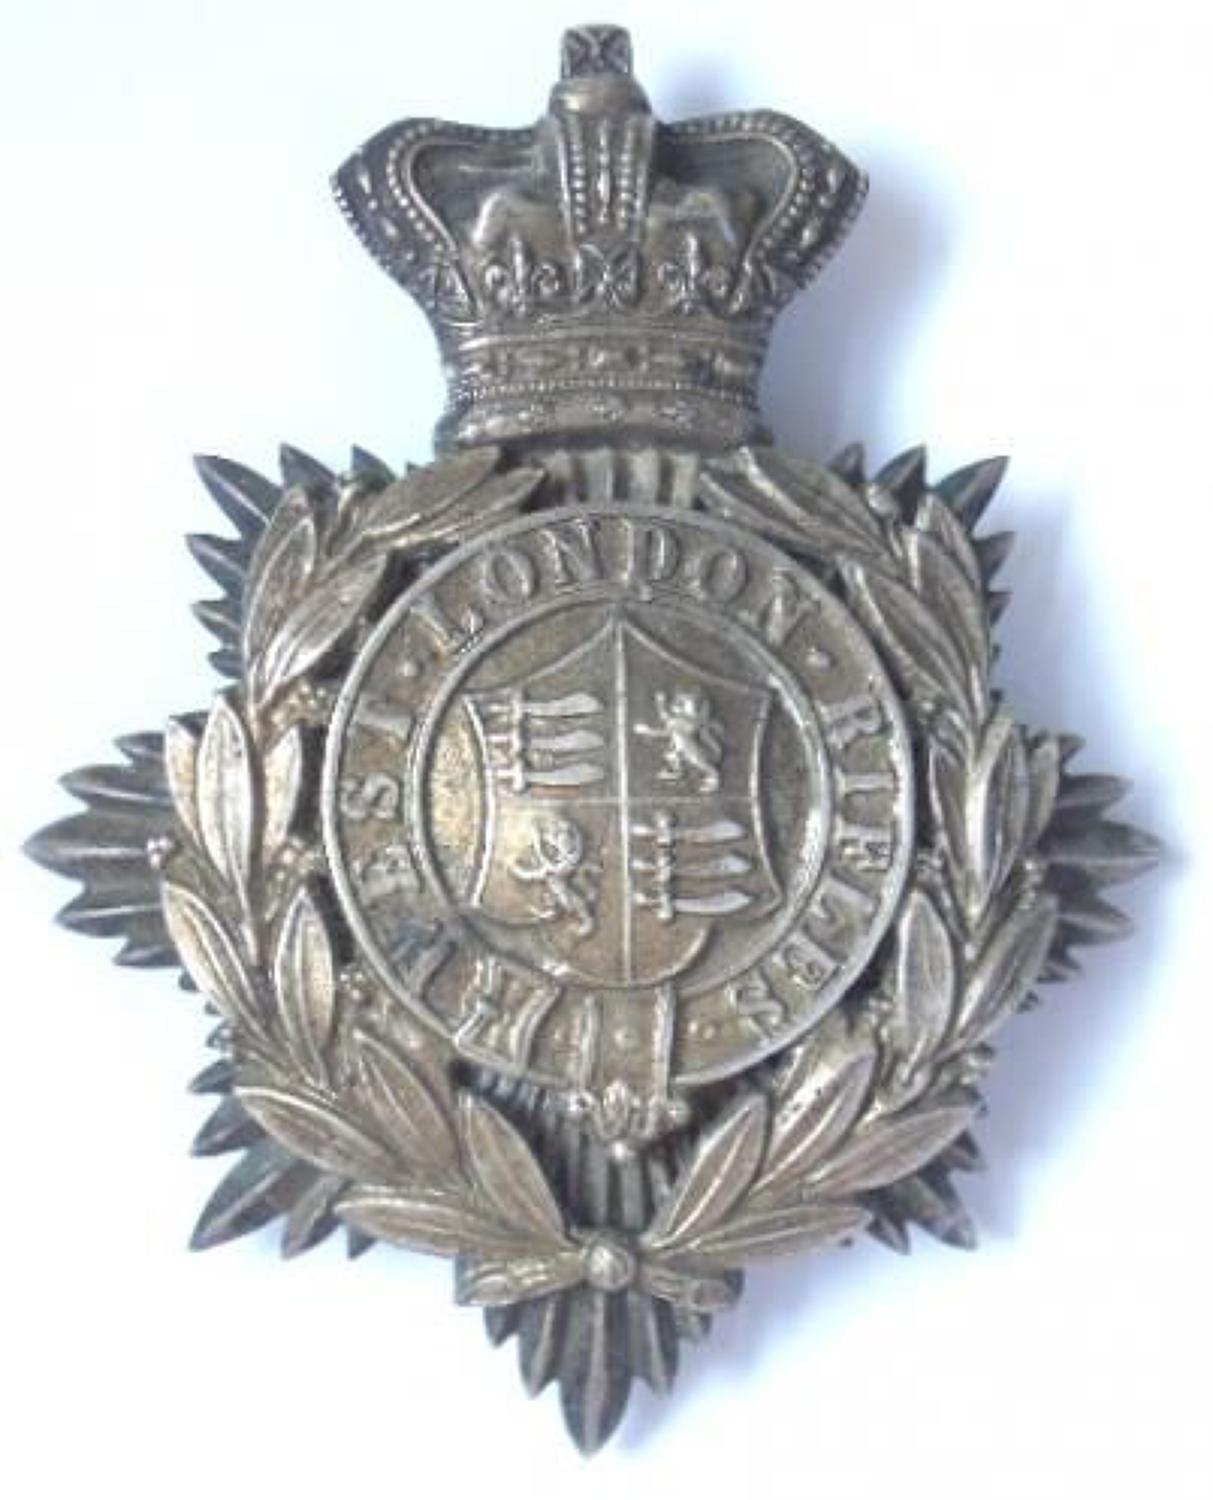 4th West London Rifle Volunteers (Kensington) Officer's shako plate